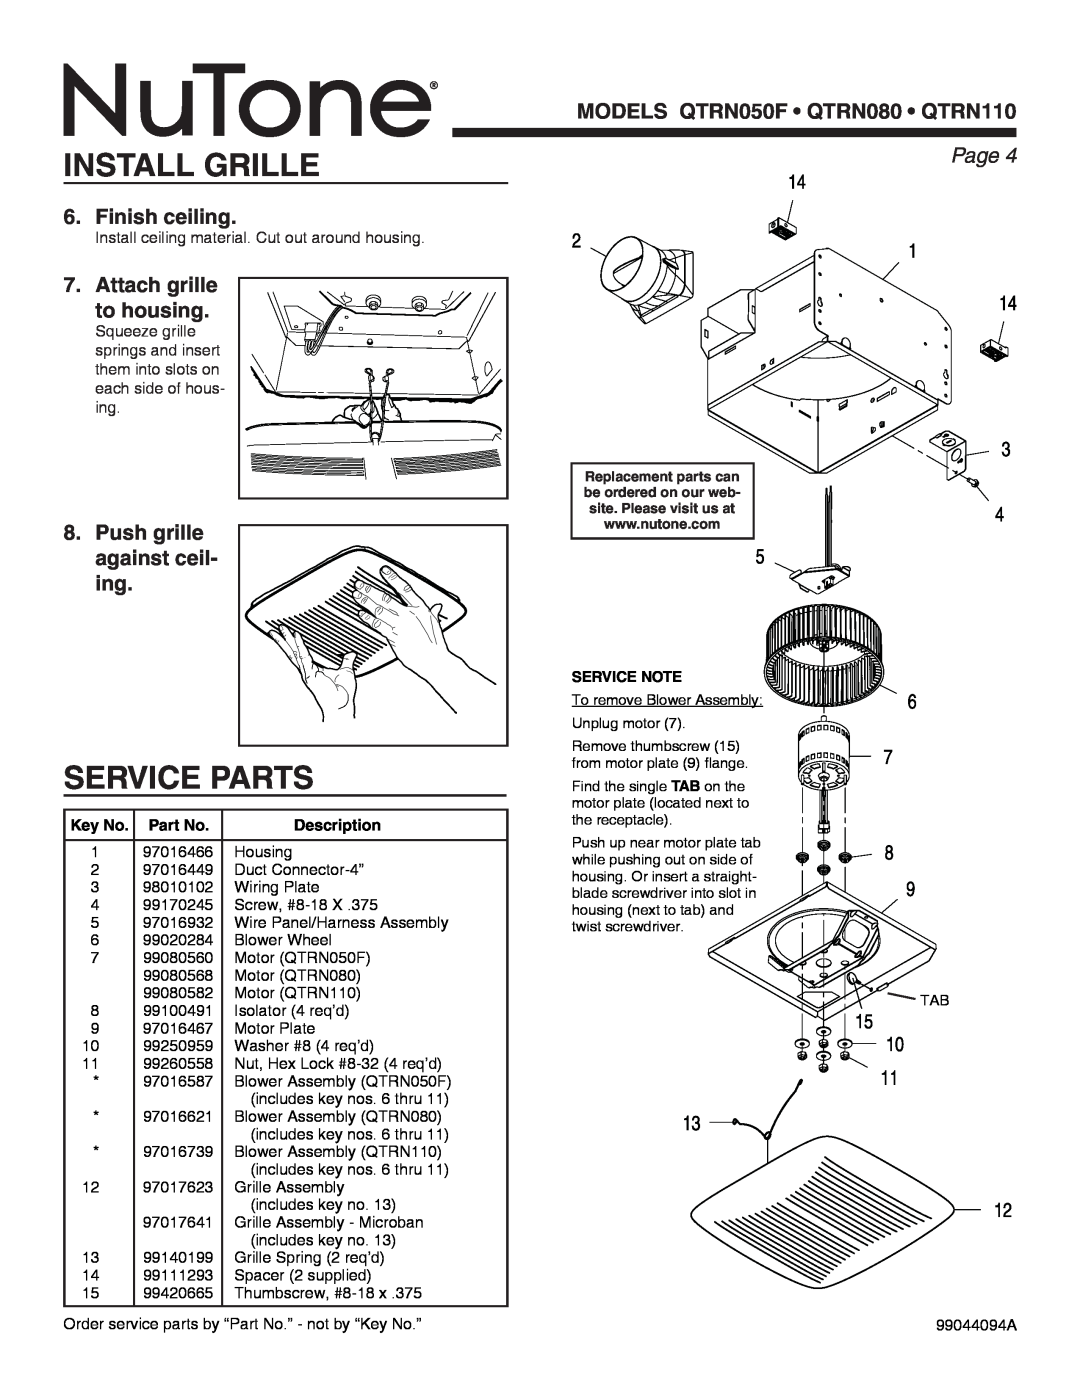 NuTone QTR series, QTRN110, QTRN080, QTRN050F warranty Install Grille, Service Parts, Page , Description 